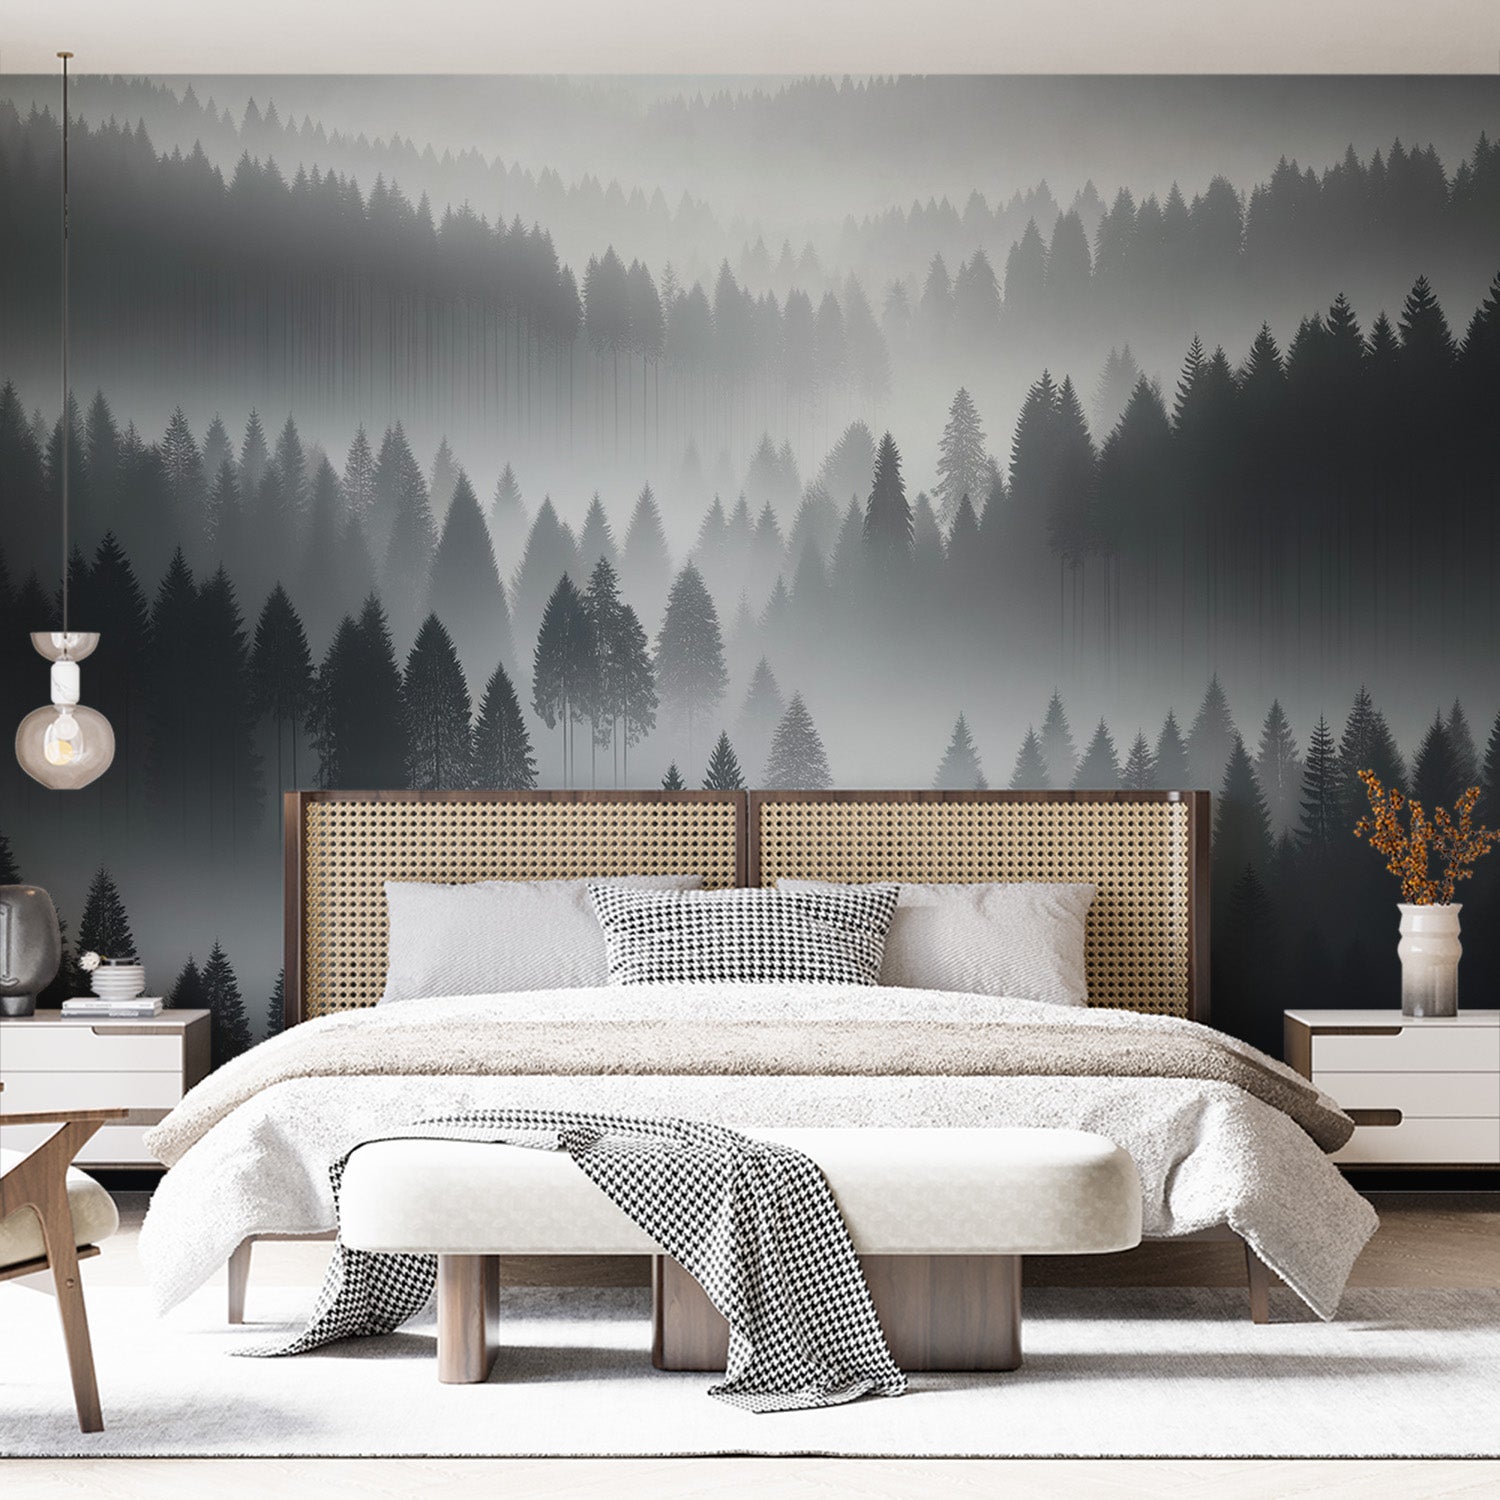  Papel pintado bosque Bruma misteriosa entre coníferas en tonos de gris